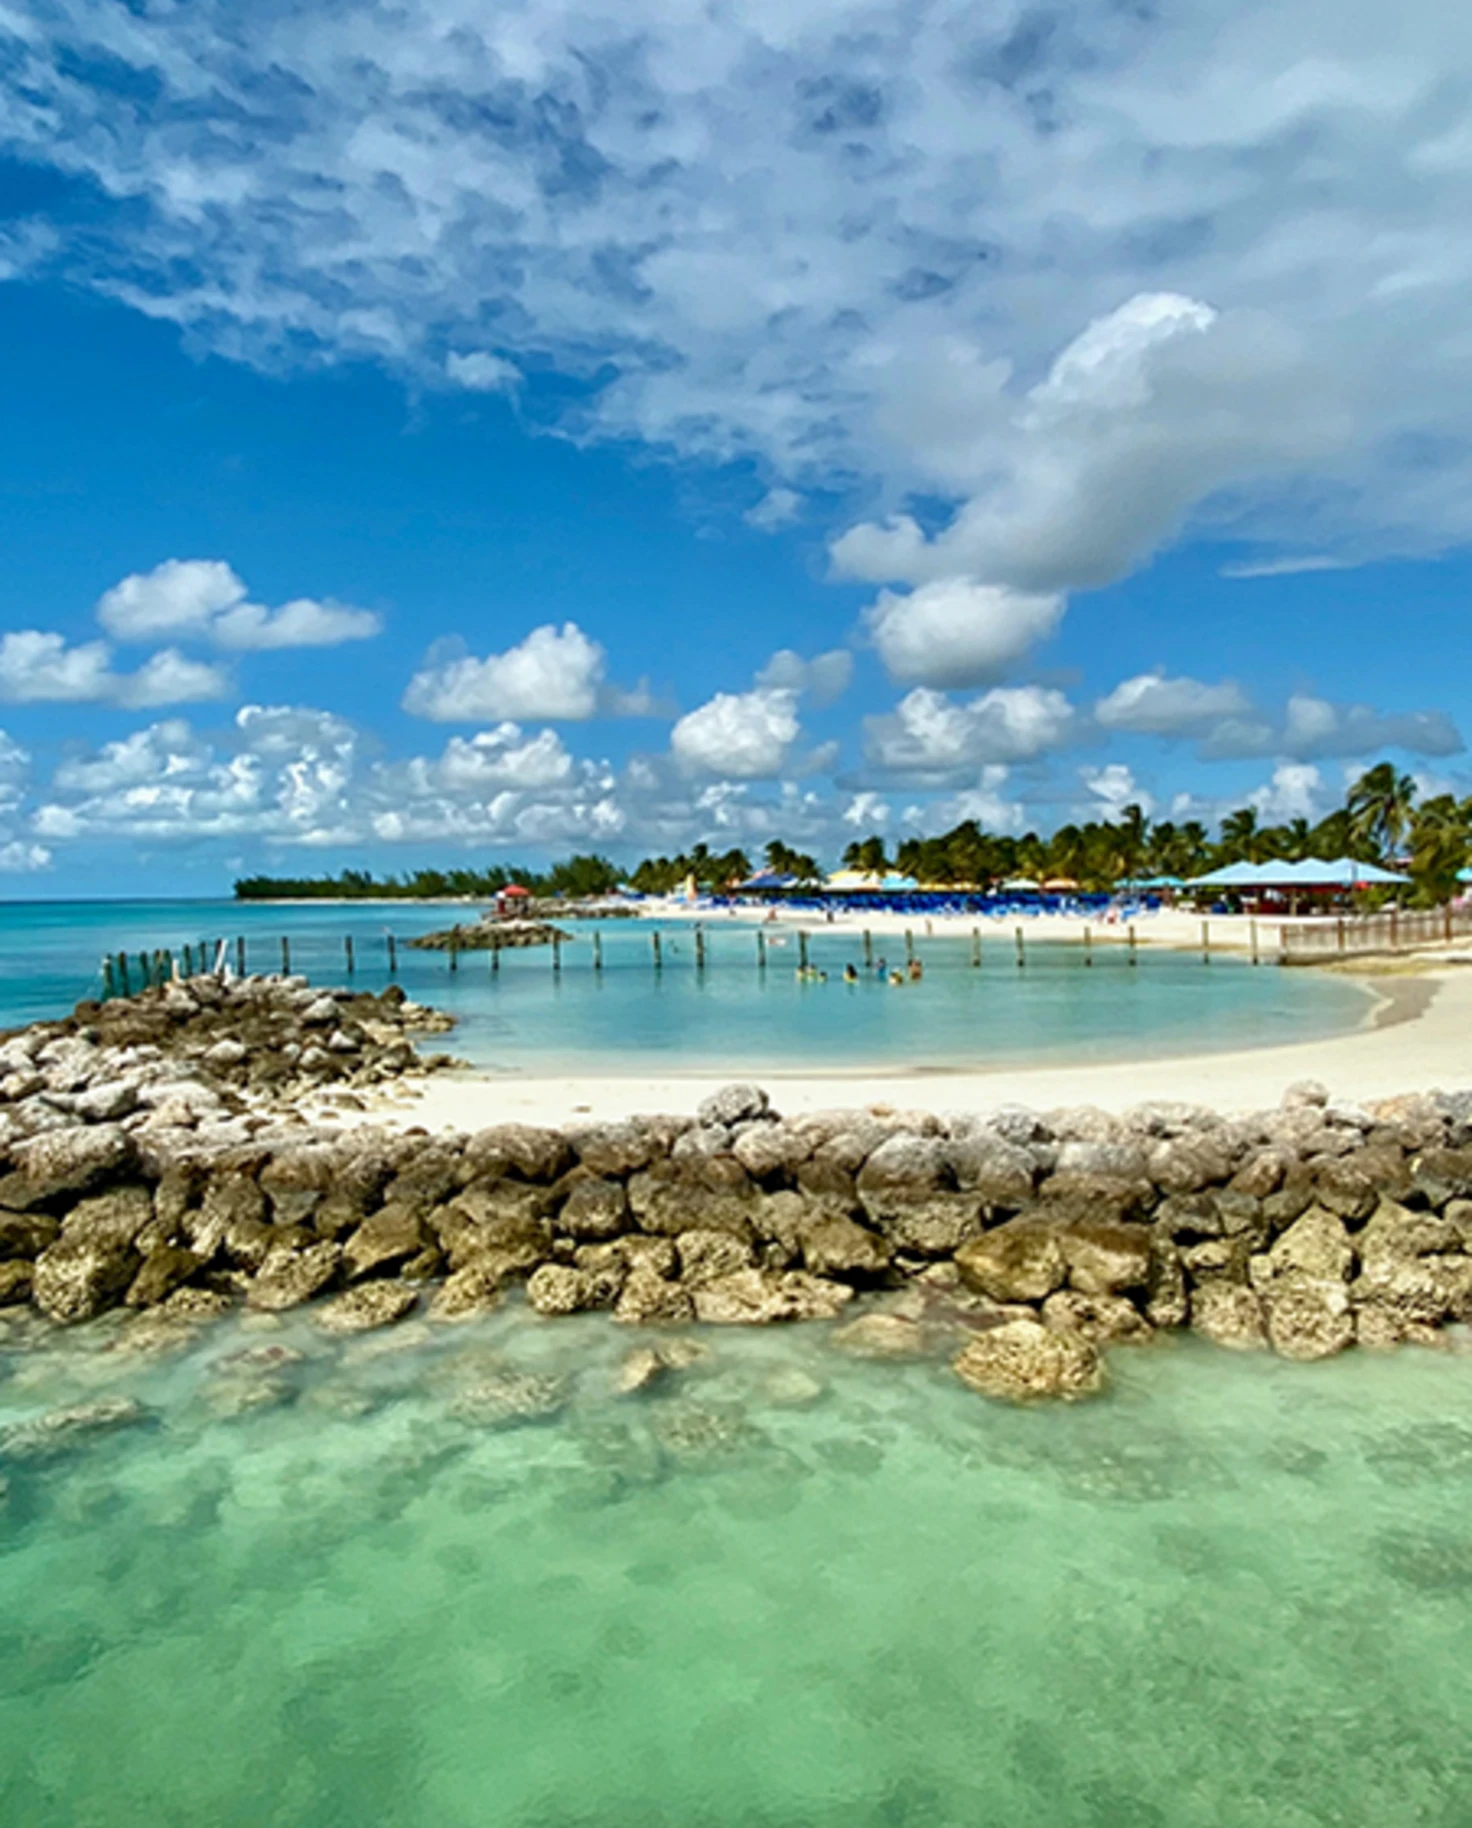 White sand beach with cabanas In Harbor Island, Bahamas.